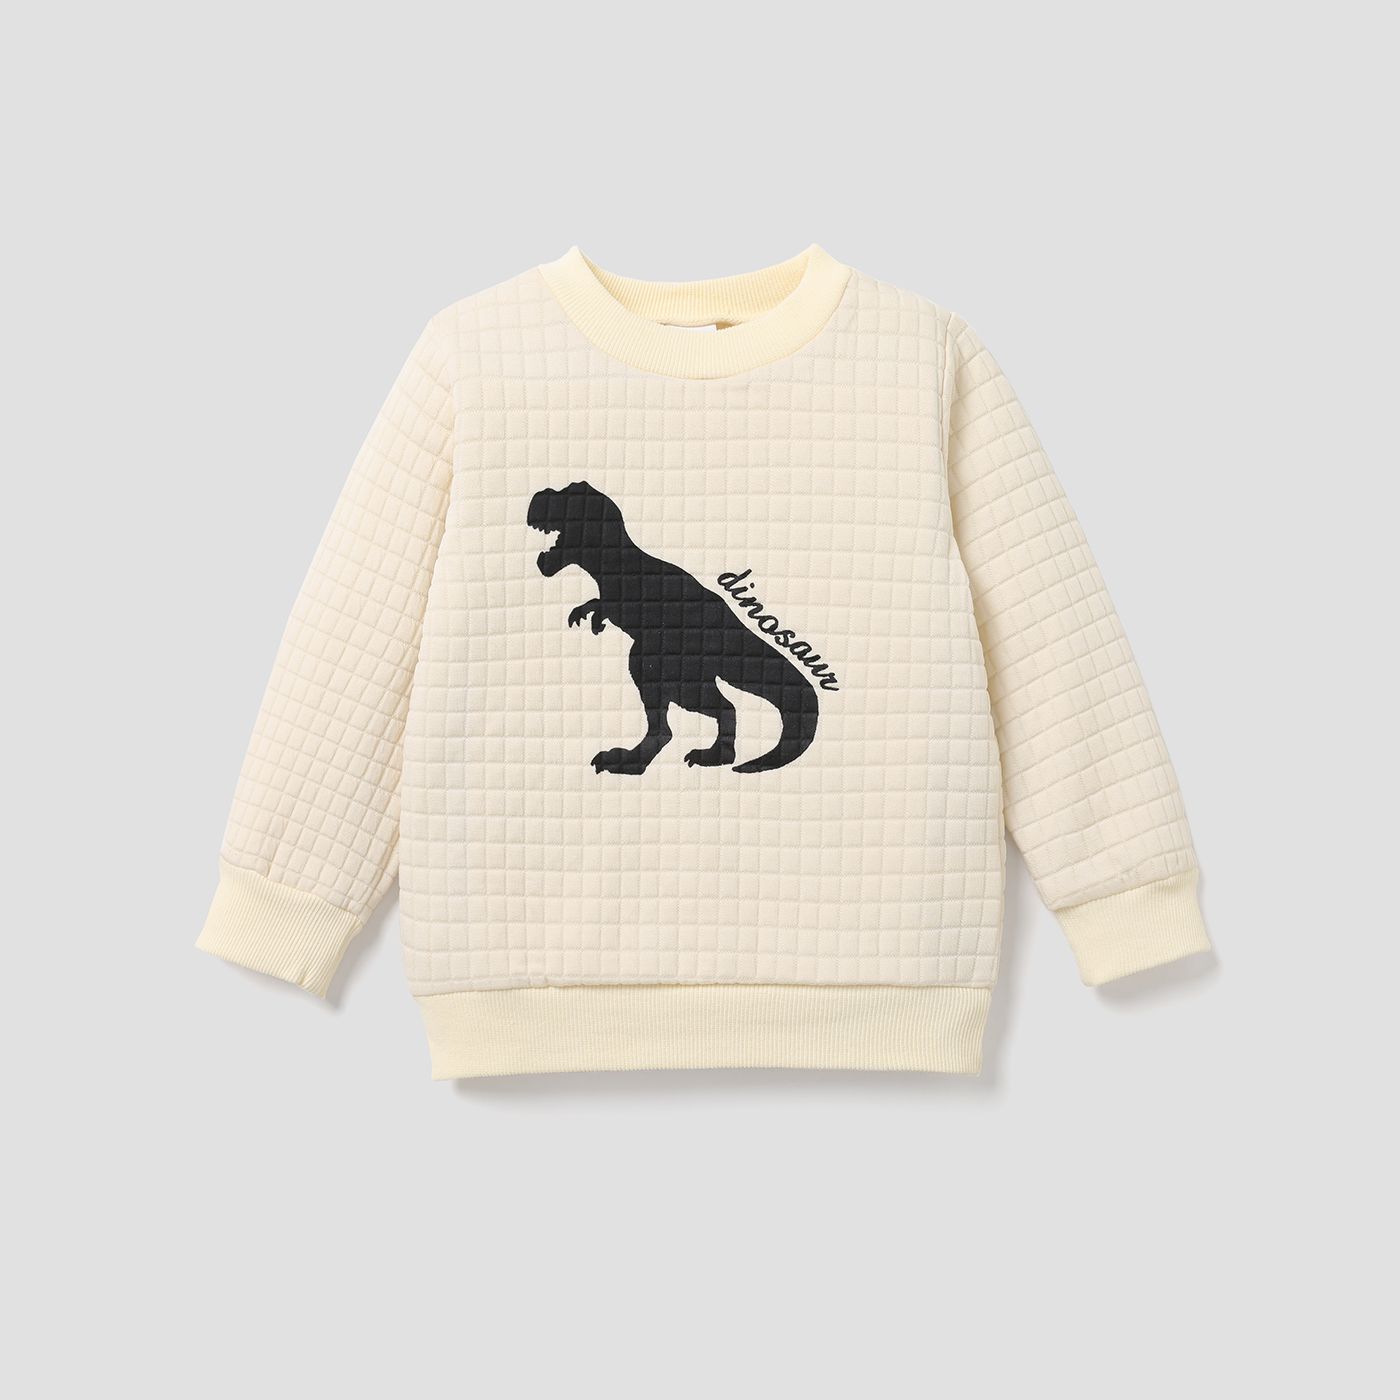 Toddler Boy Letter Dinosaur Print Textured Pullover Sweatshirt